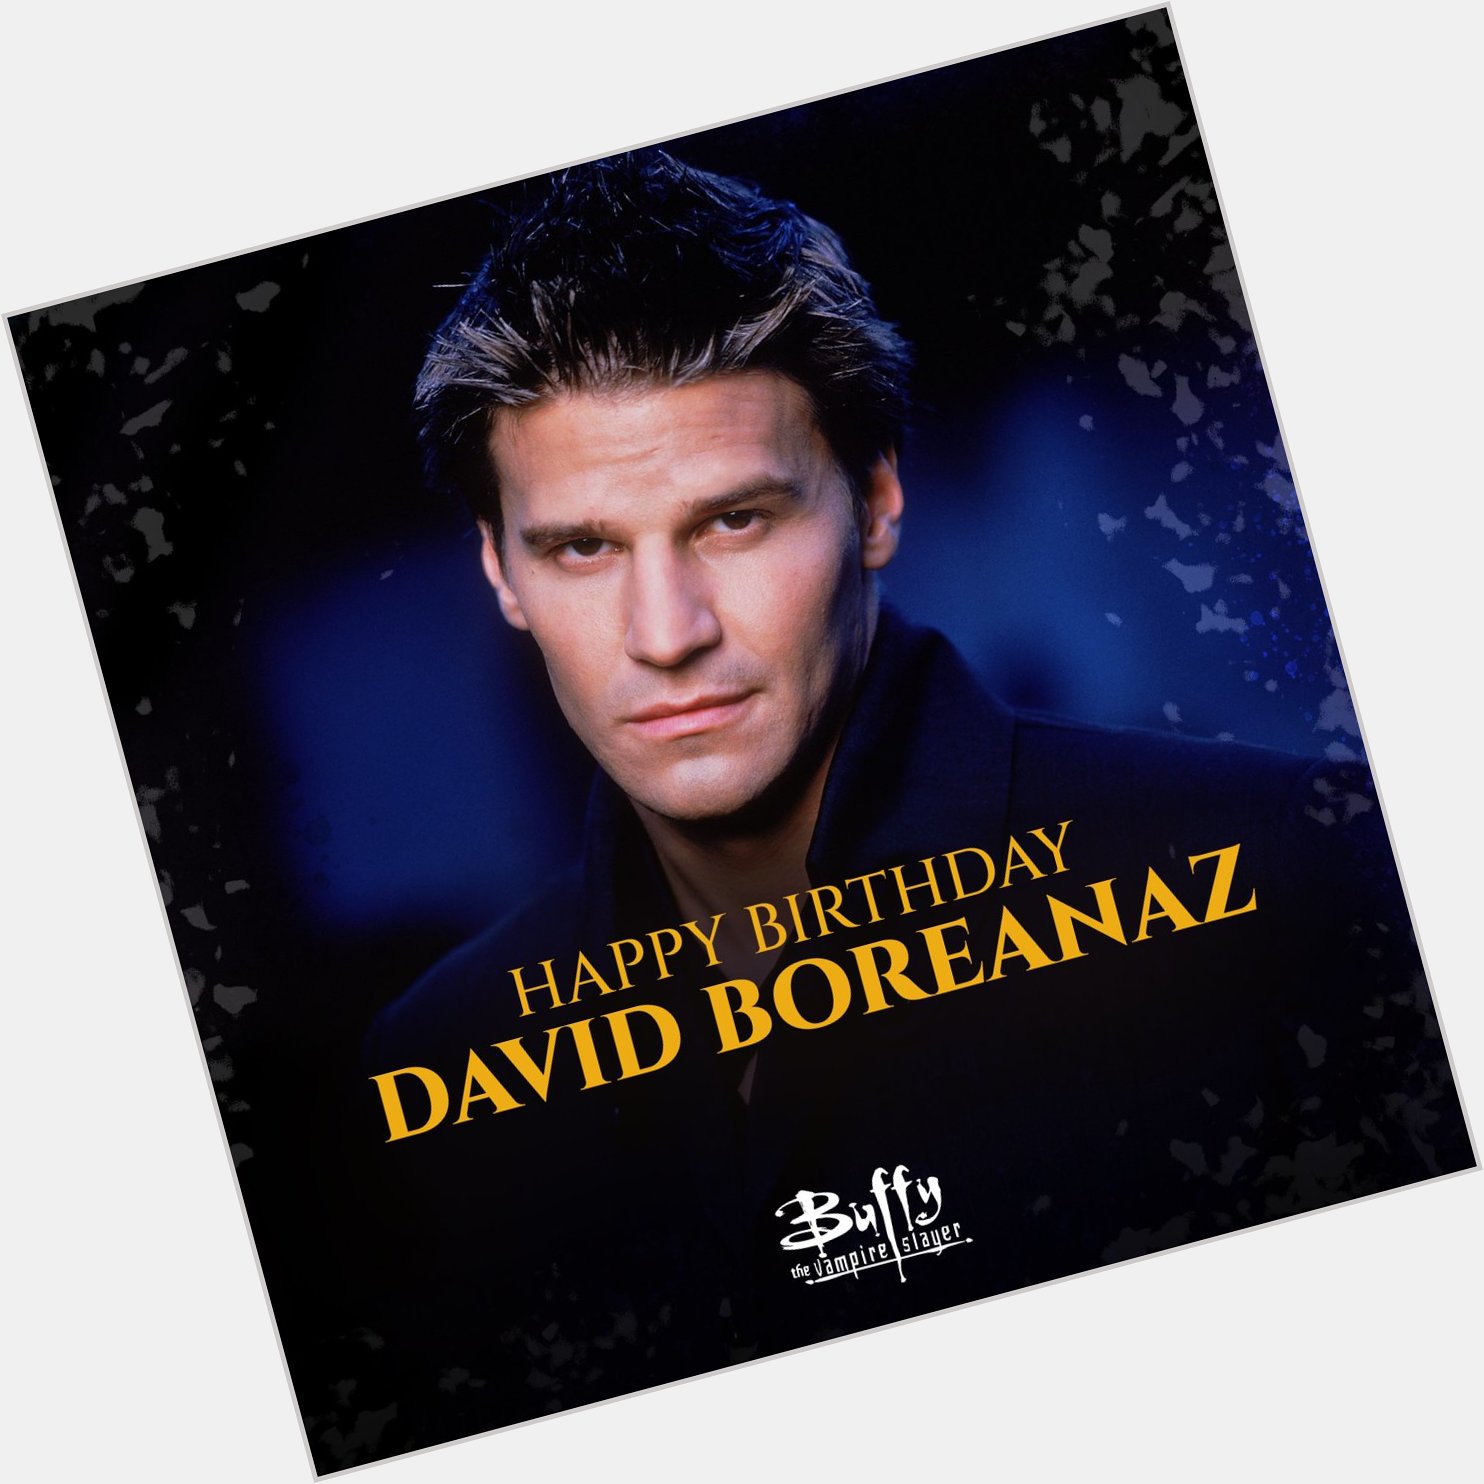 Wishing David Boreanaz a very Happy Birthday! 